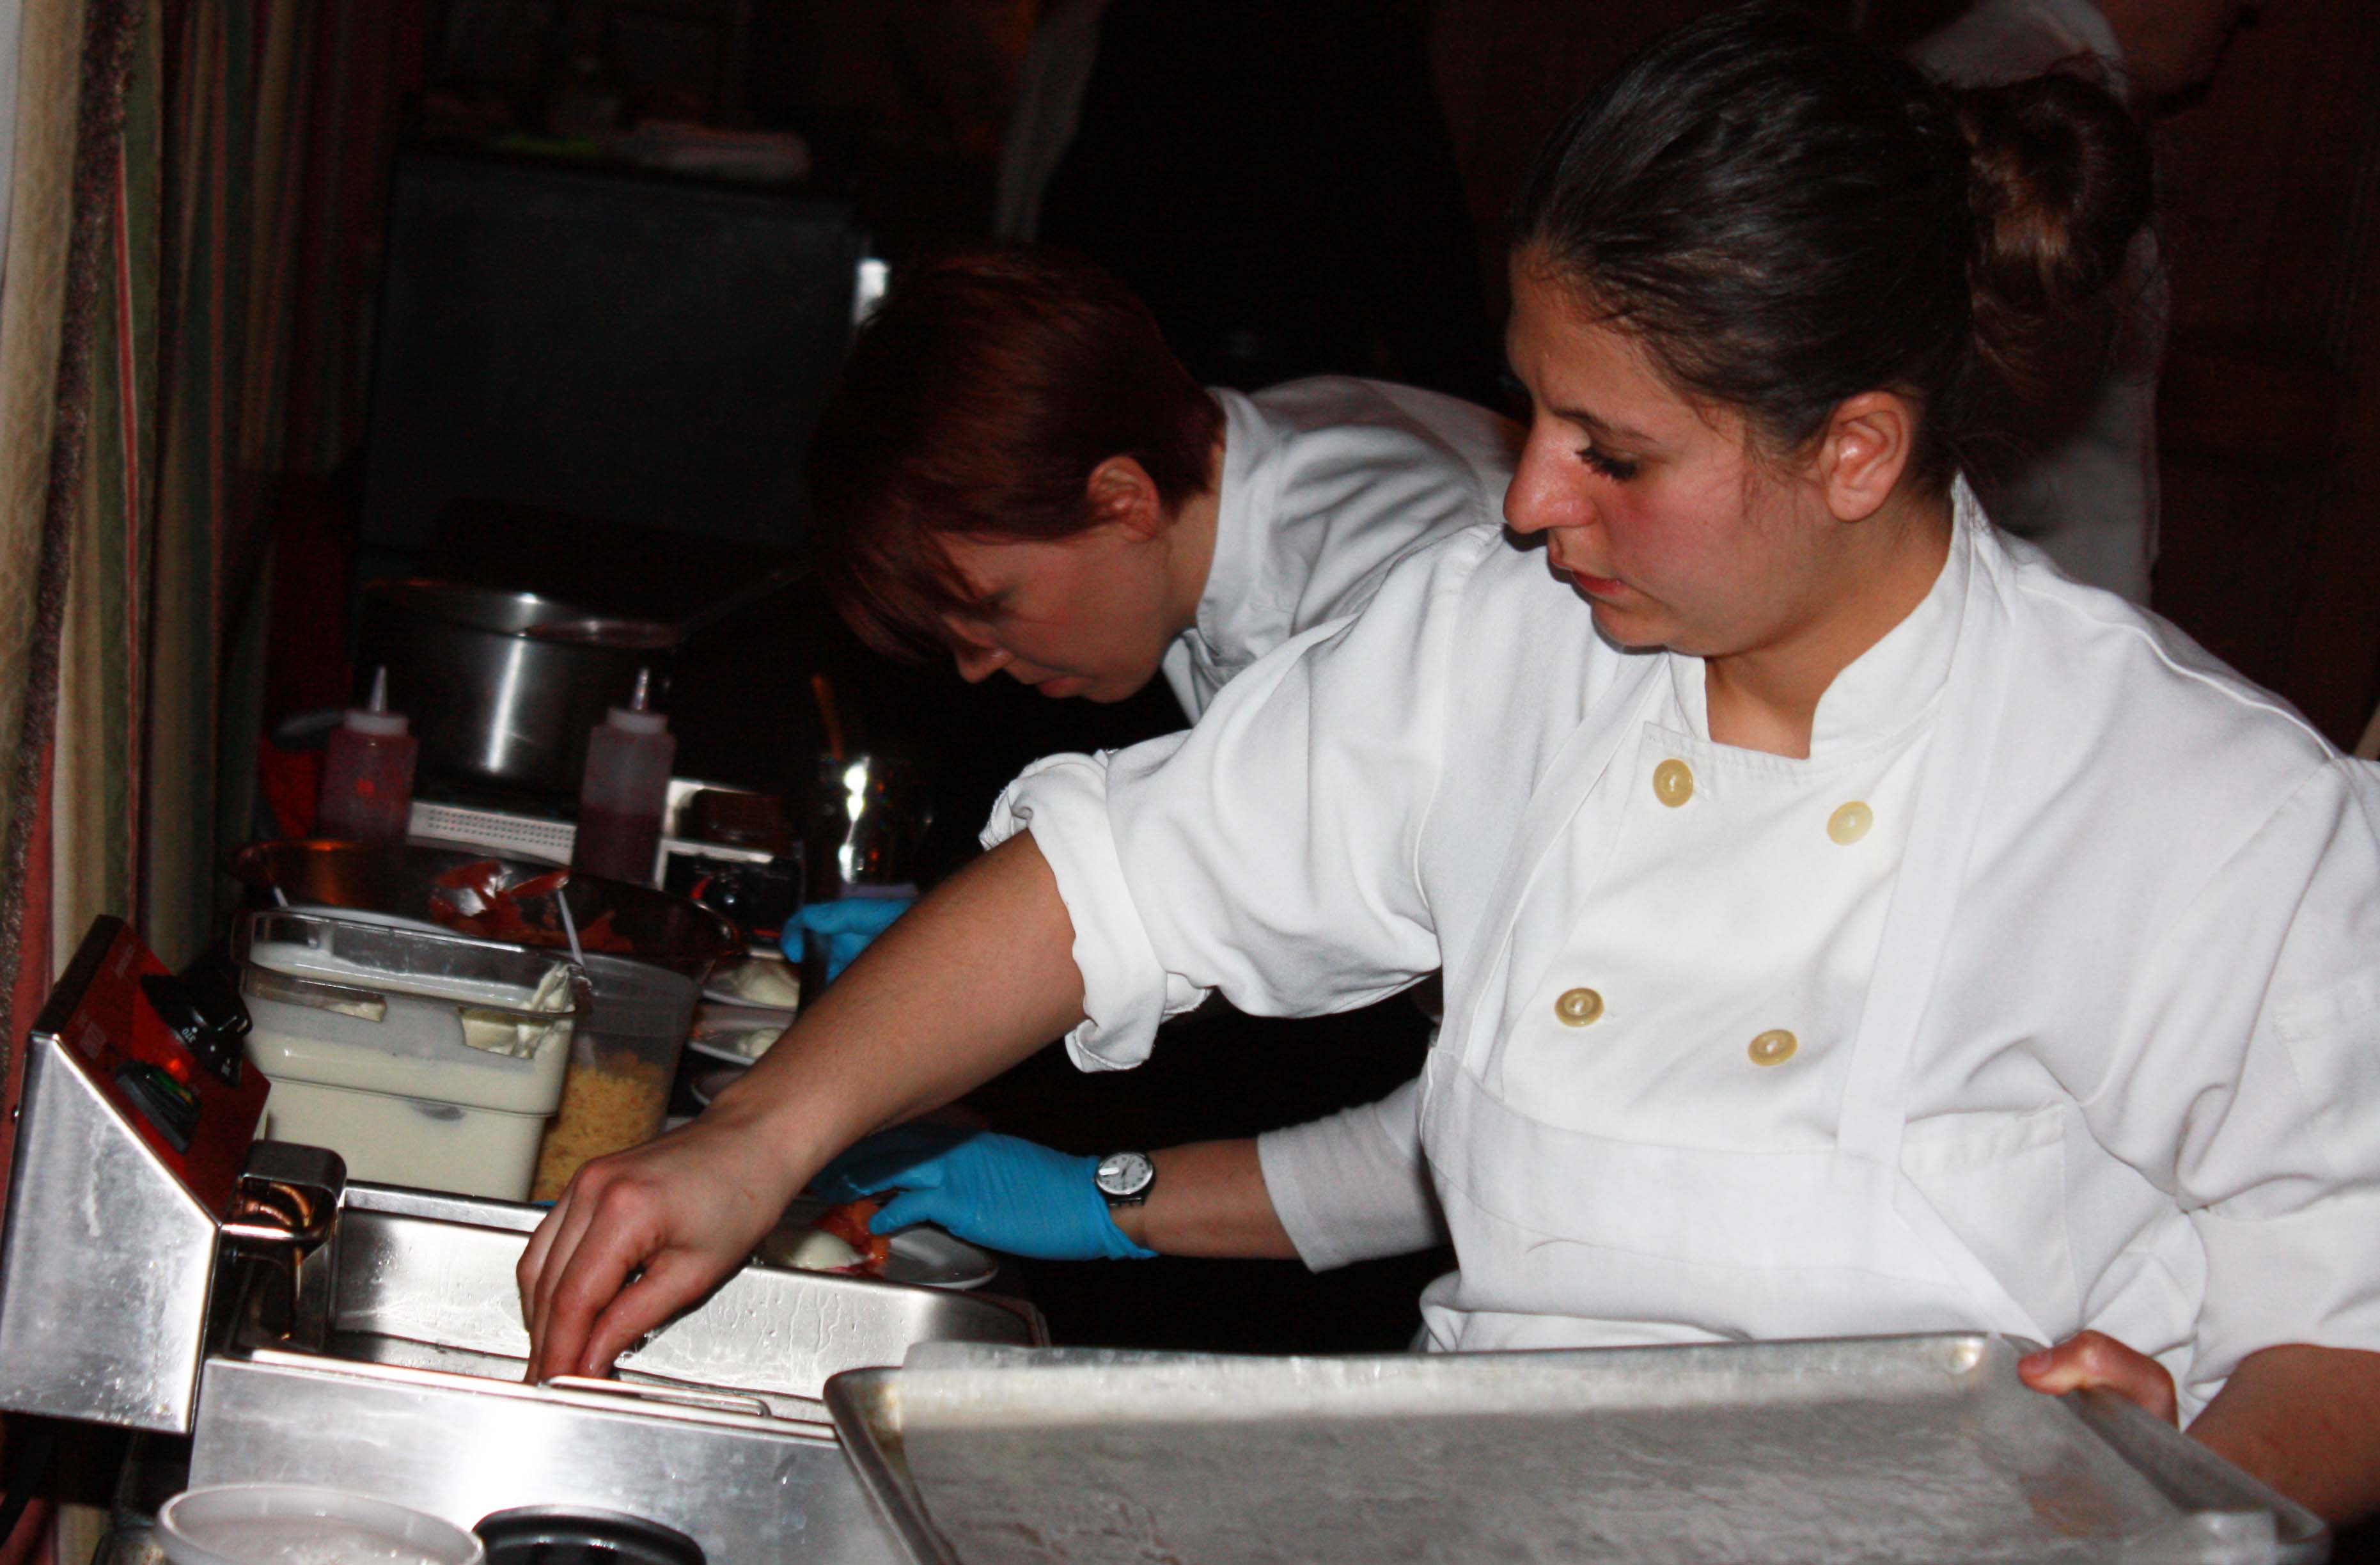 Morello chefs prepare dishes at Greenwich Hospital’s annual Great Chefs fundraiser.